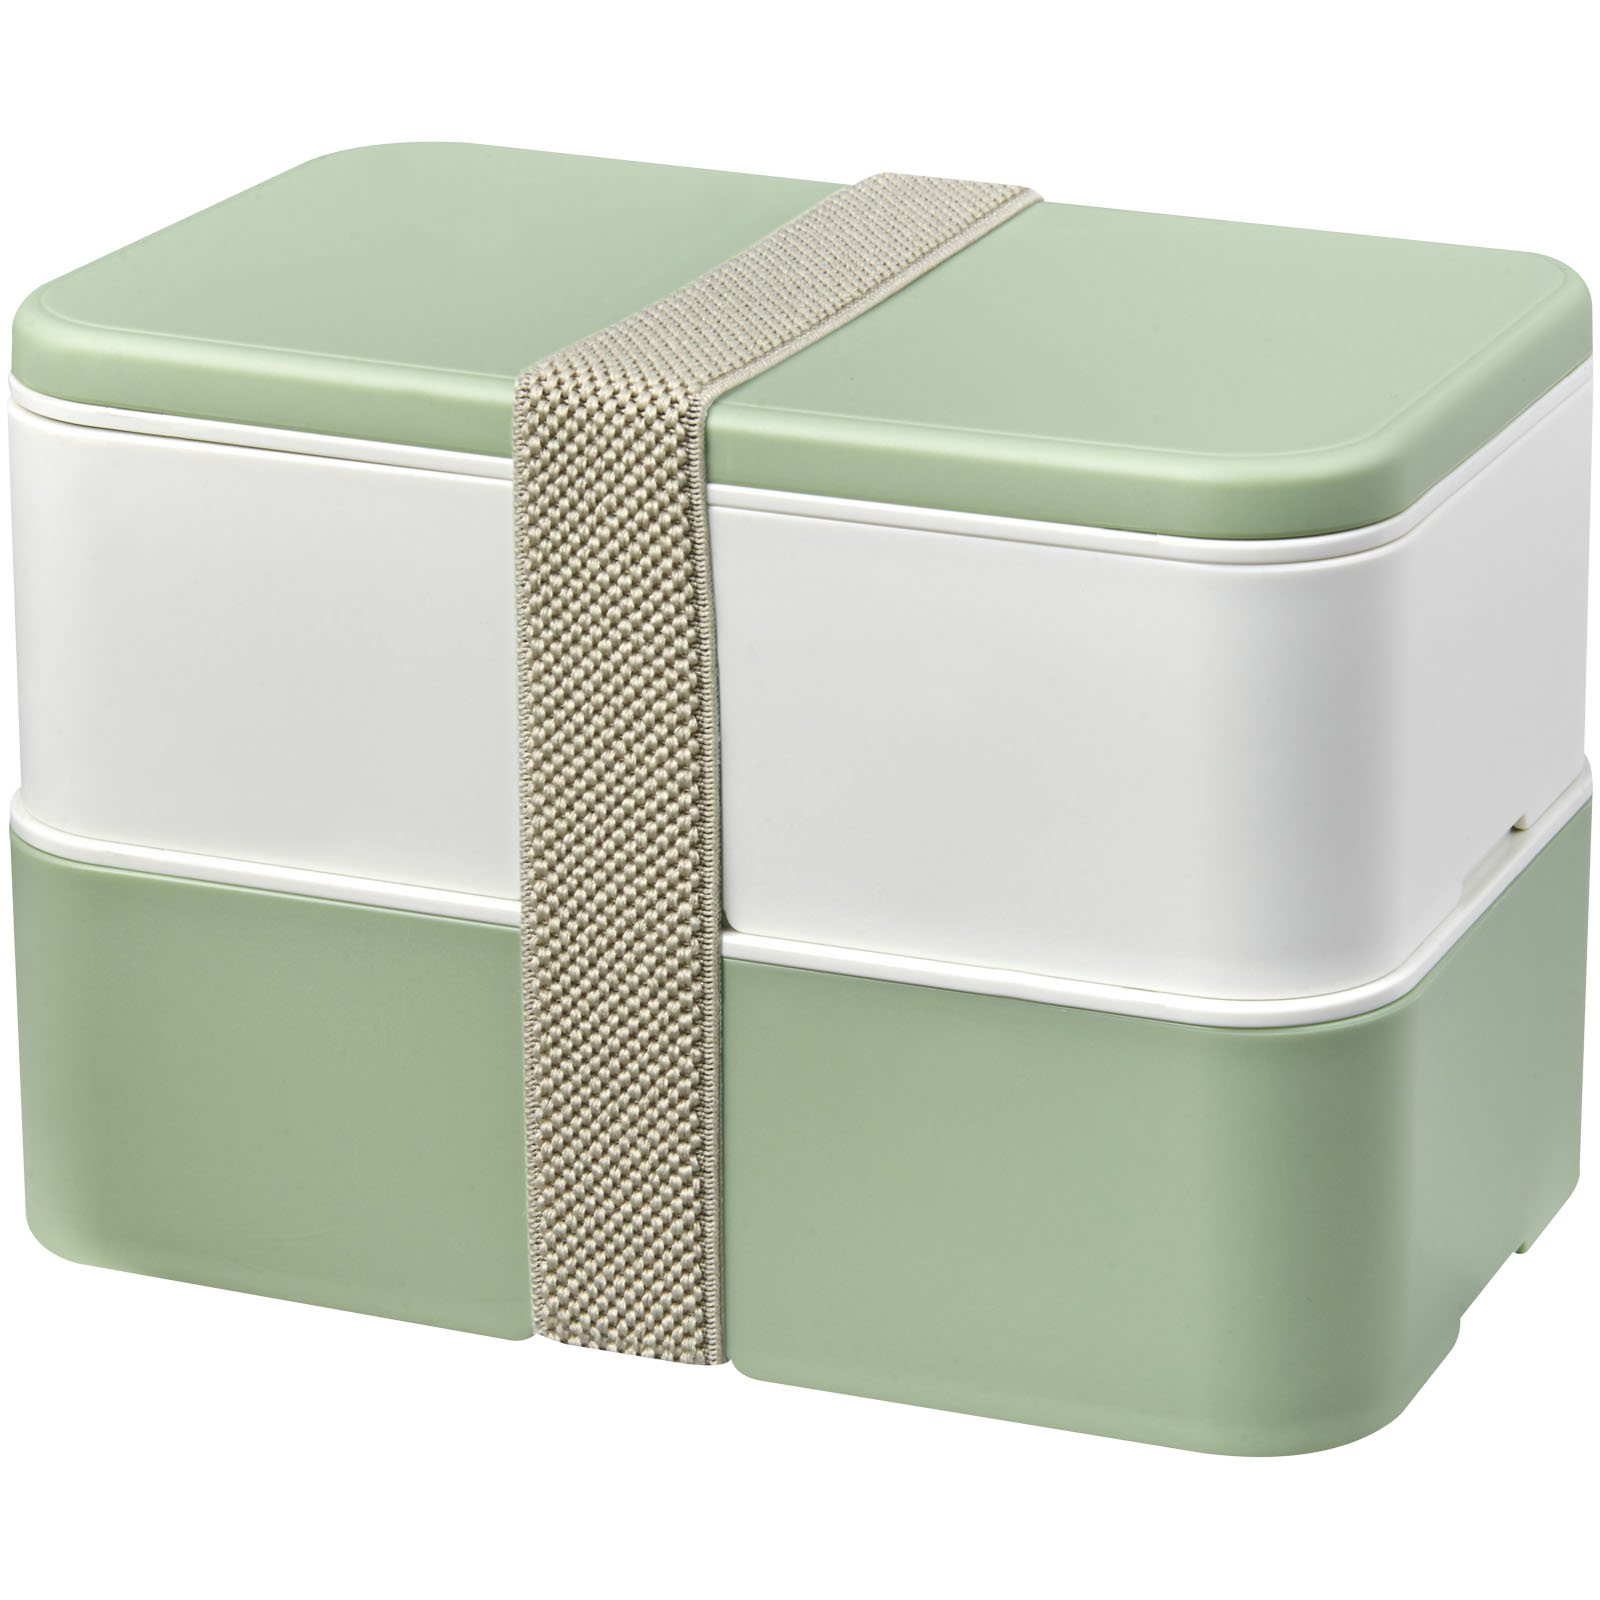 Home & Kitchen - MIYO Renew double layer lunch box